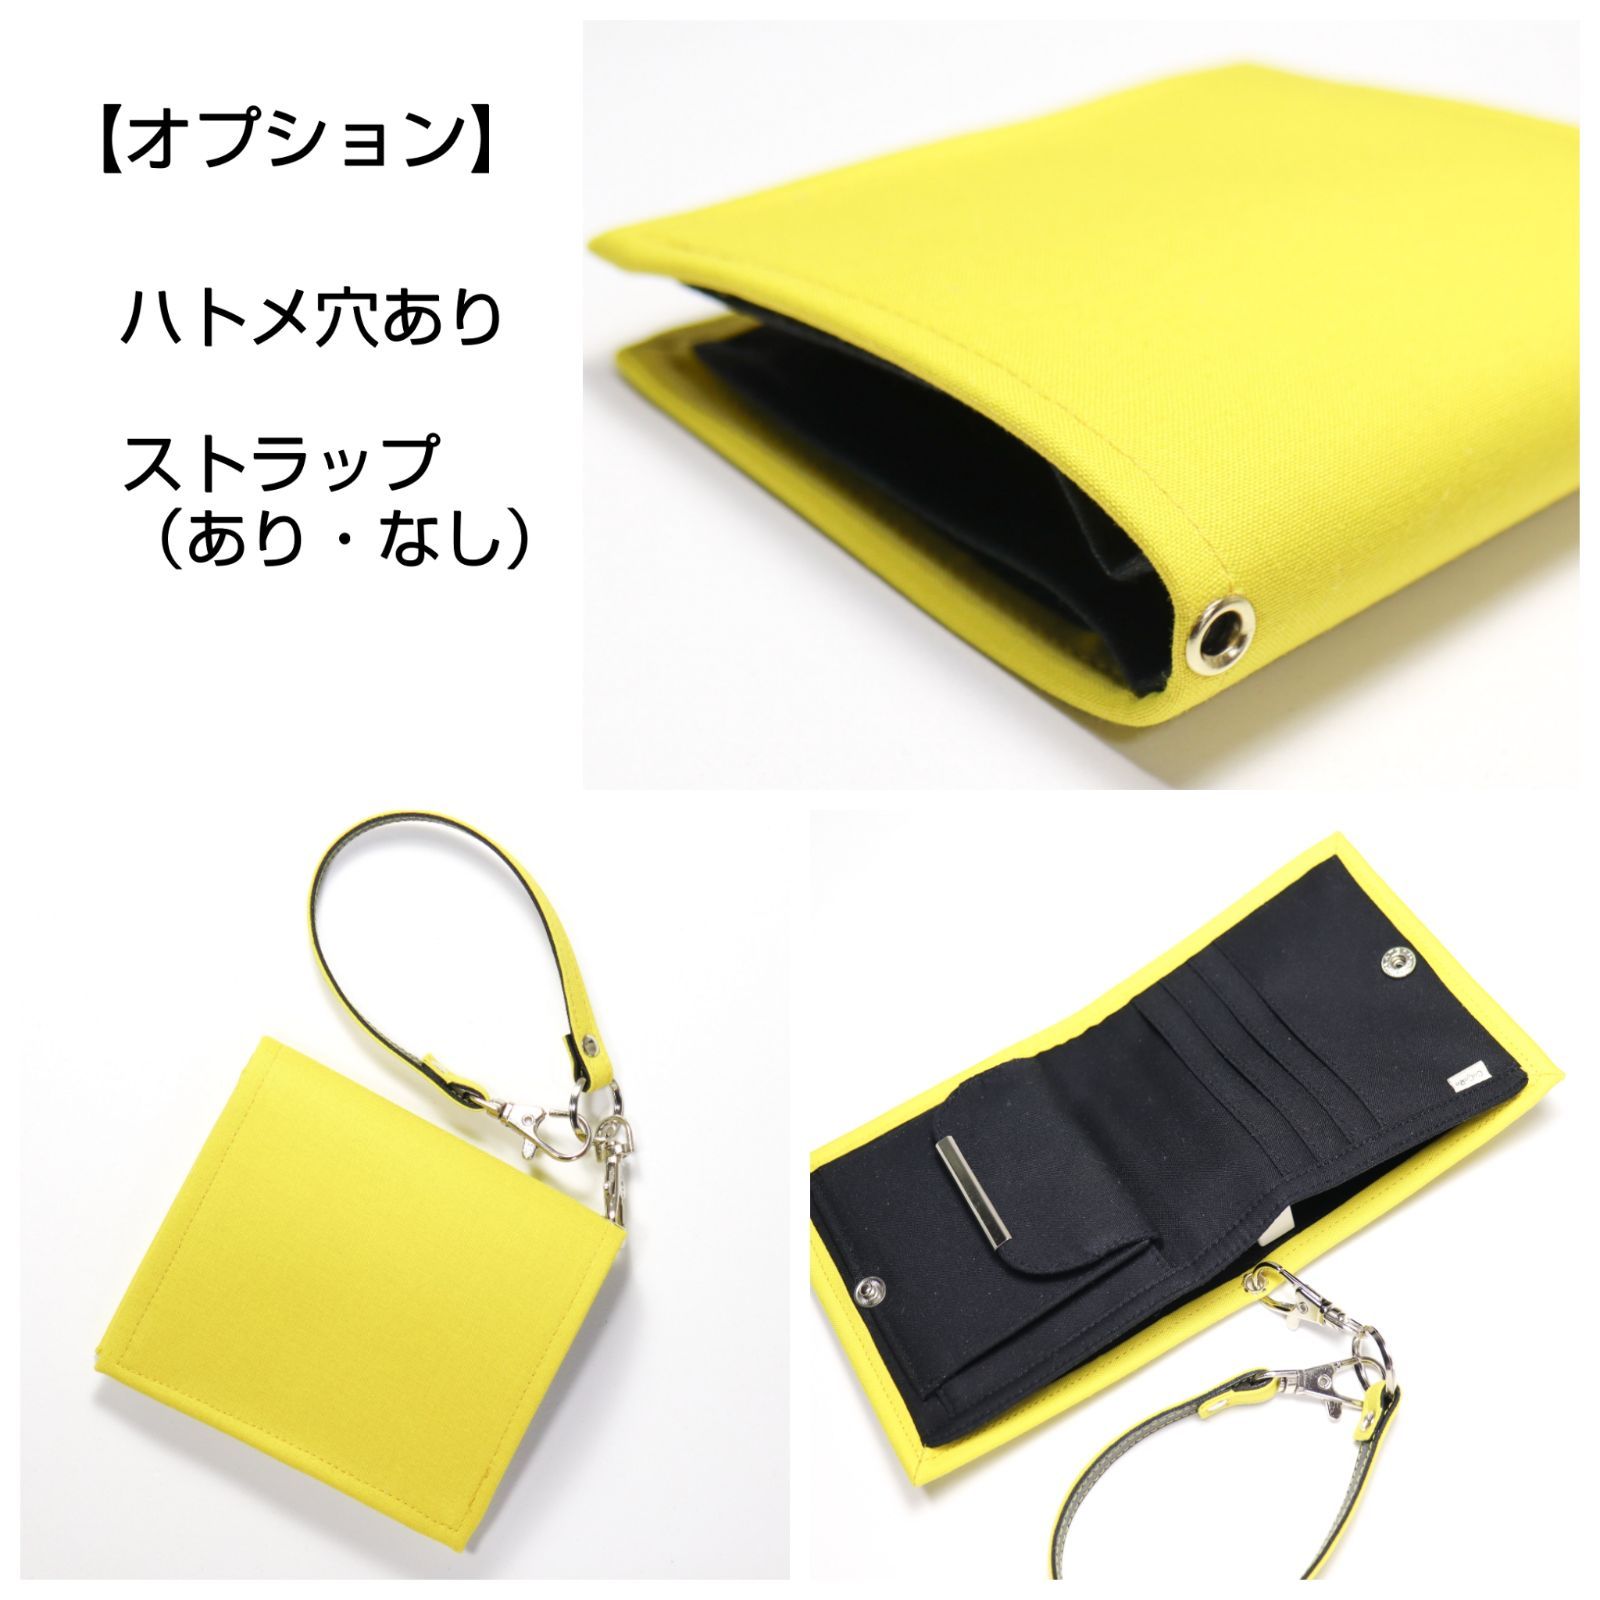 【mol】コンパクト 色変更可 シンプル二つ折り財布 北欧柄 nina-moln 受注生産 10日以内に発送